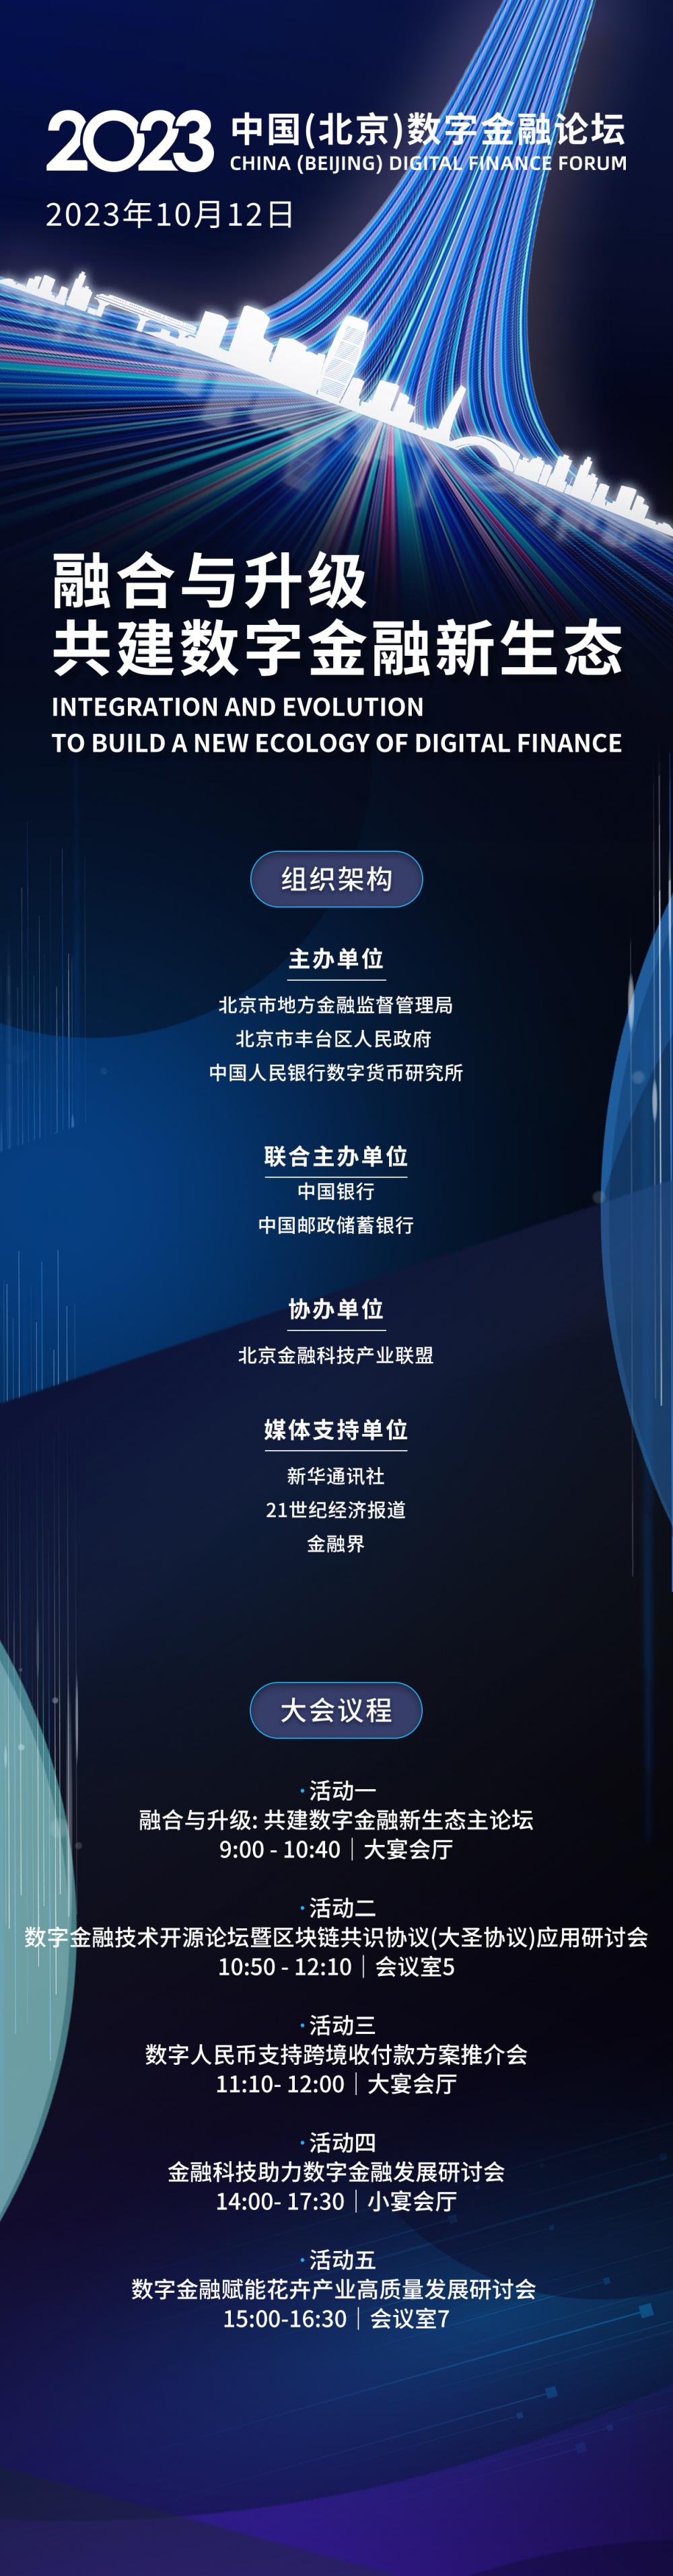 bat365中文官方网站倒计时2天！2023中国（北京）数字金融论坛即将启幕议程(图1)